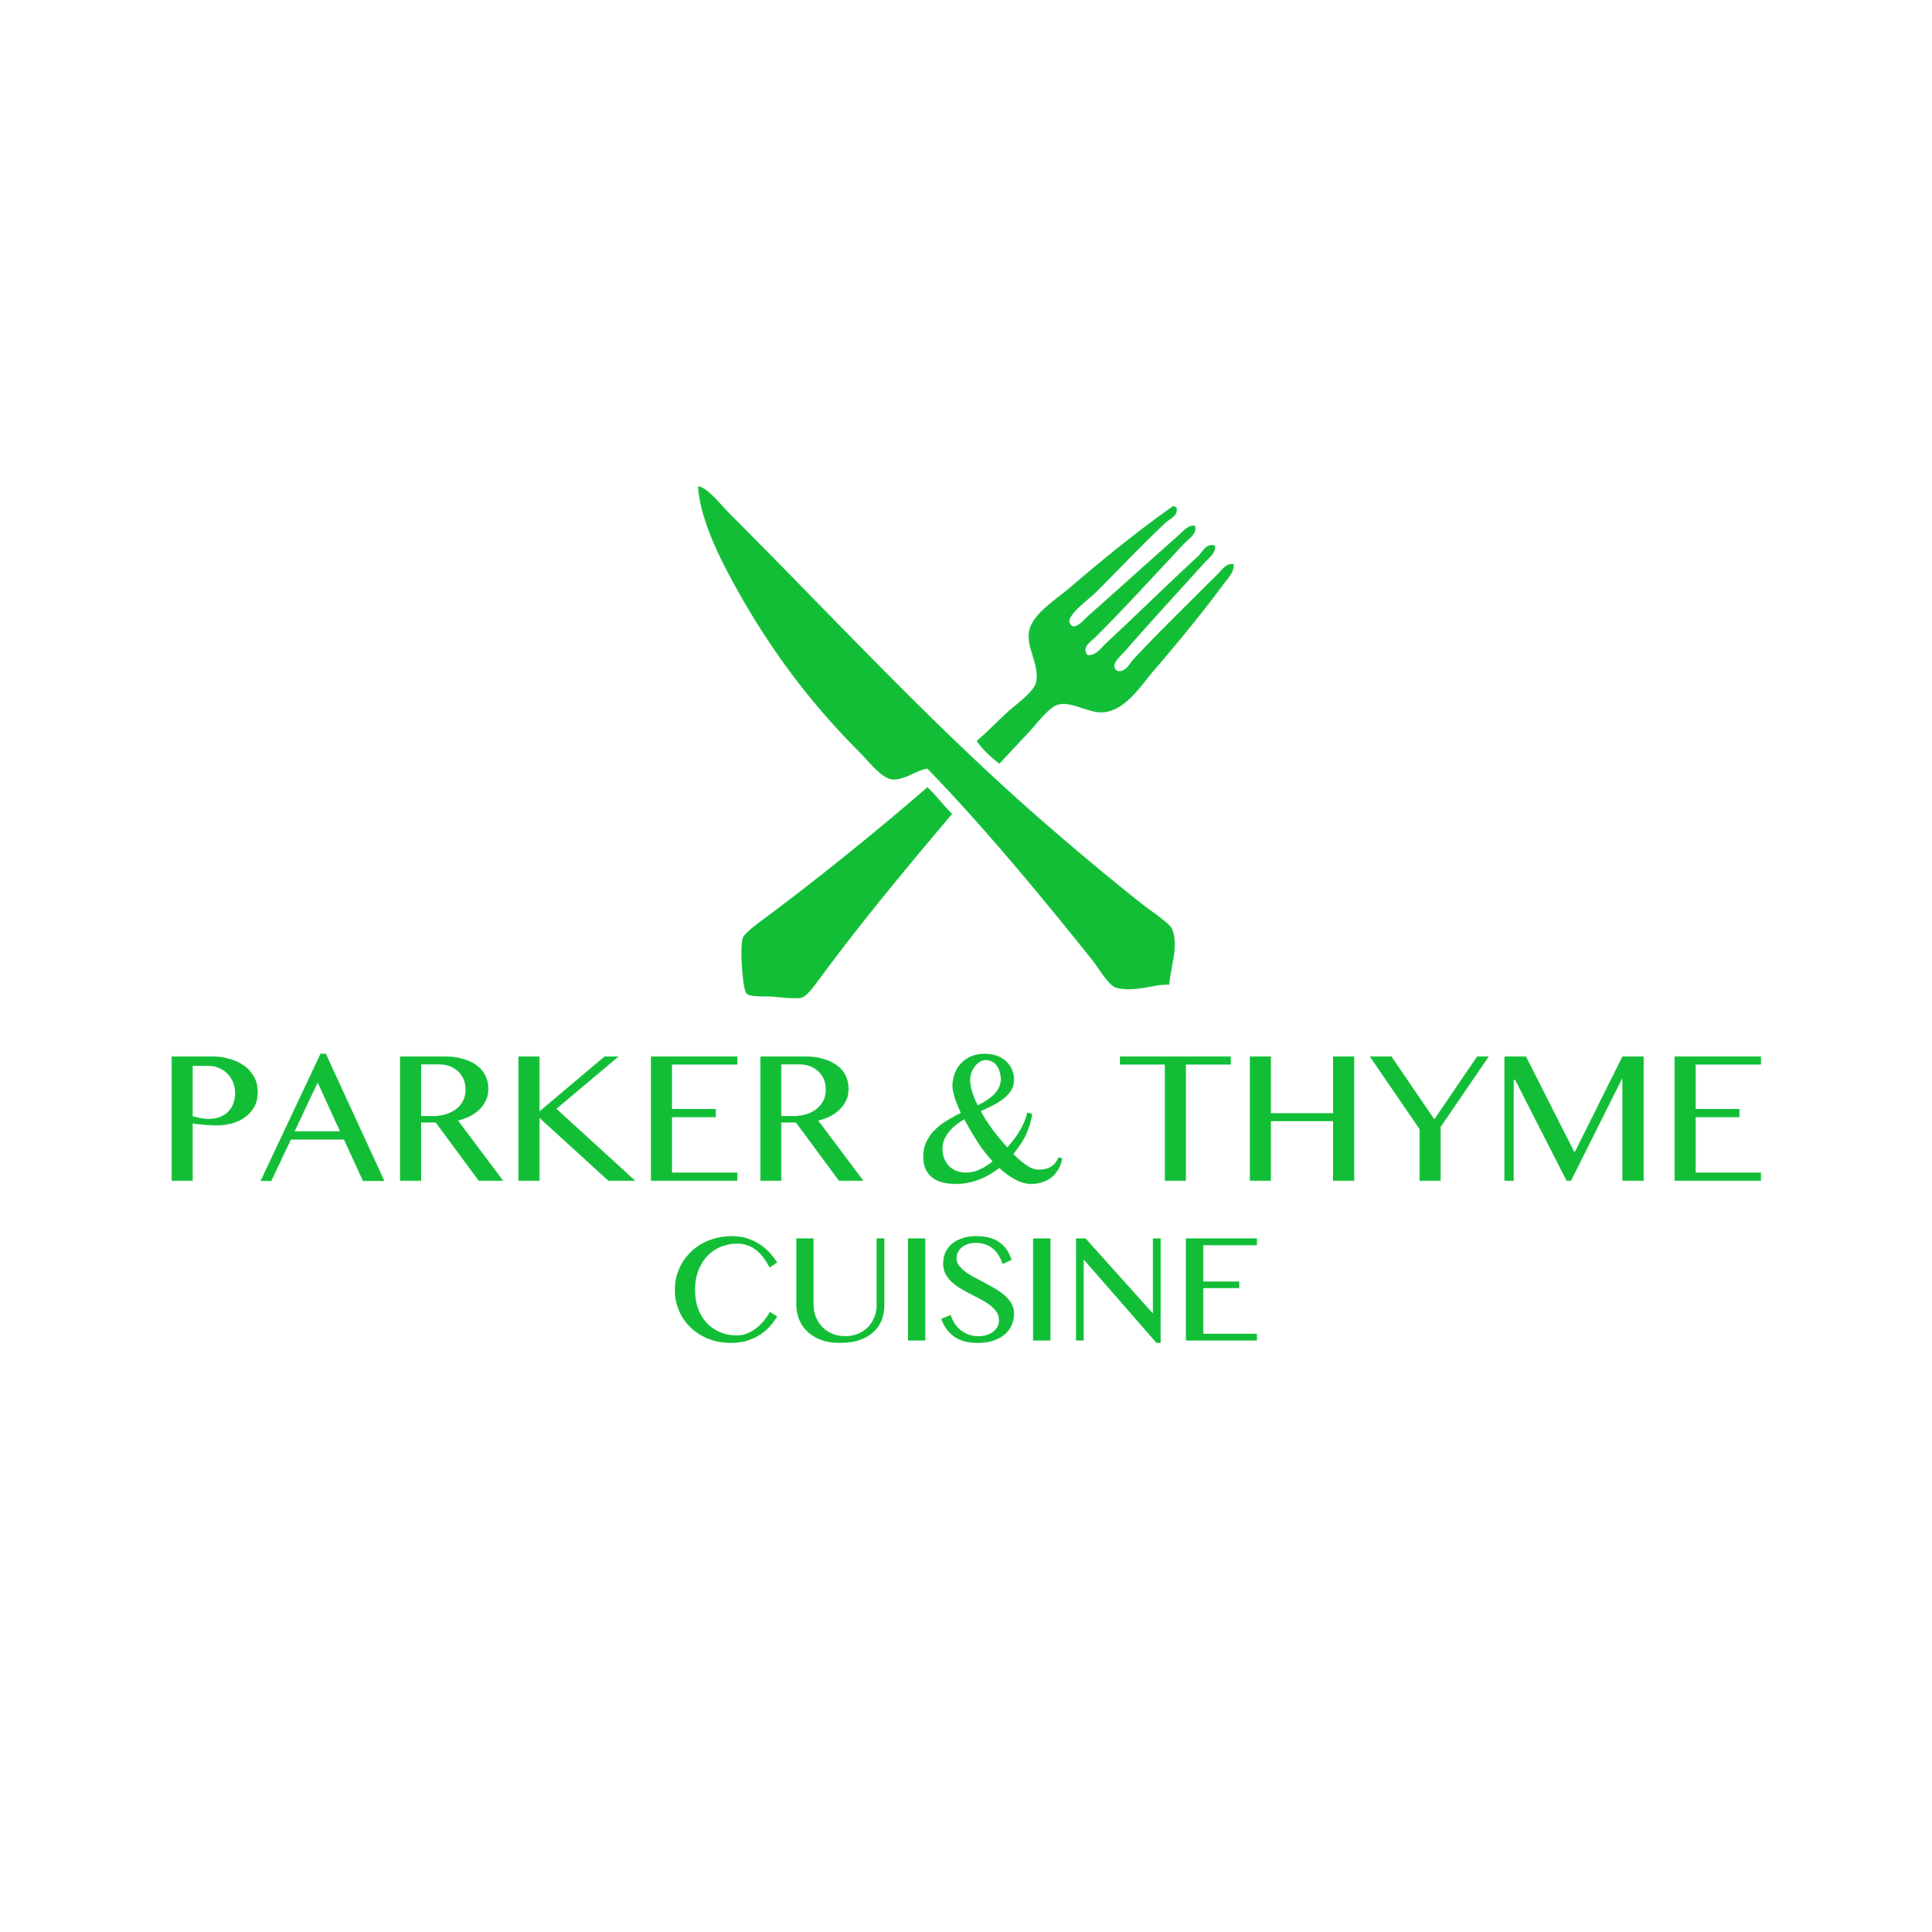 PARKER & THYME logo.png